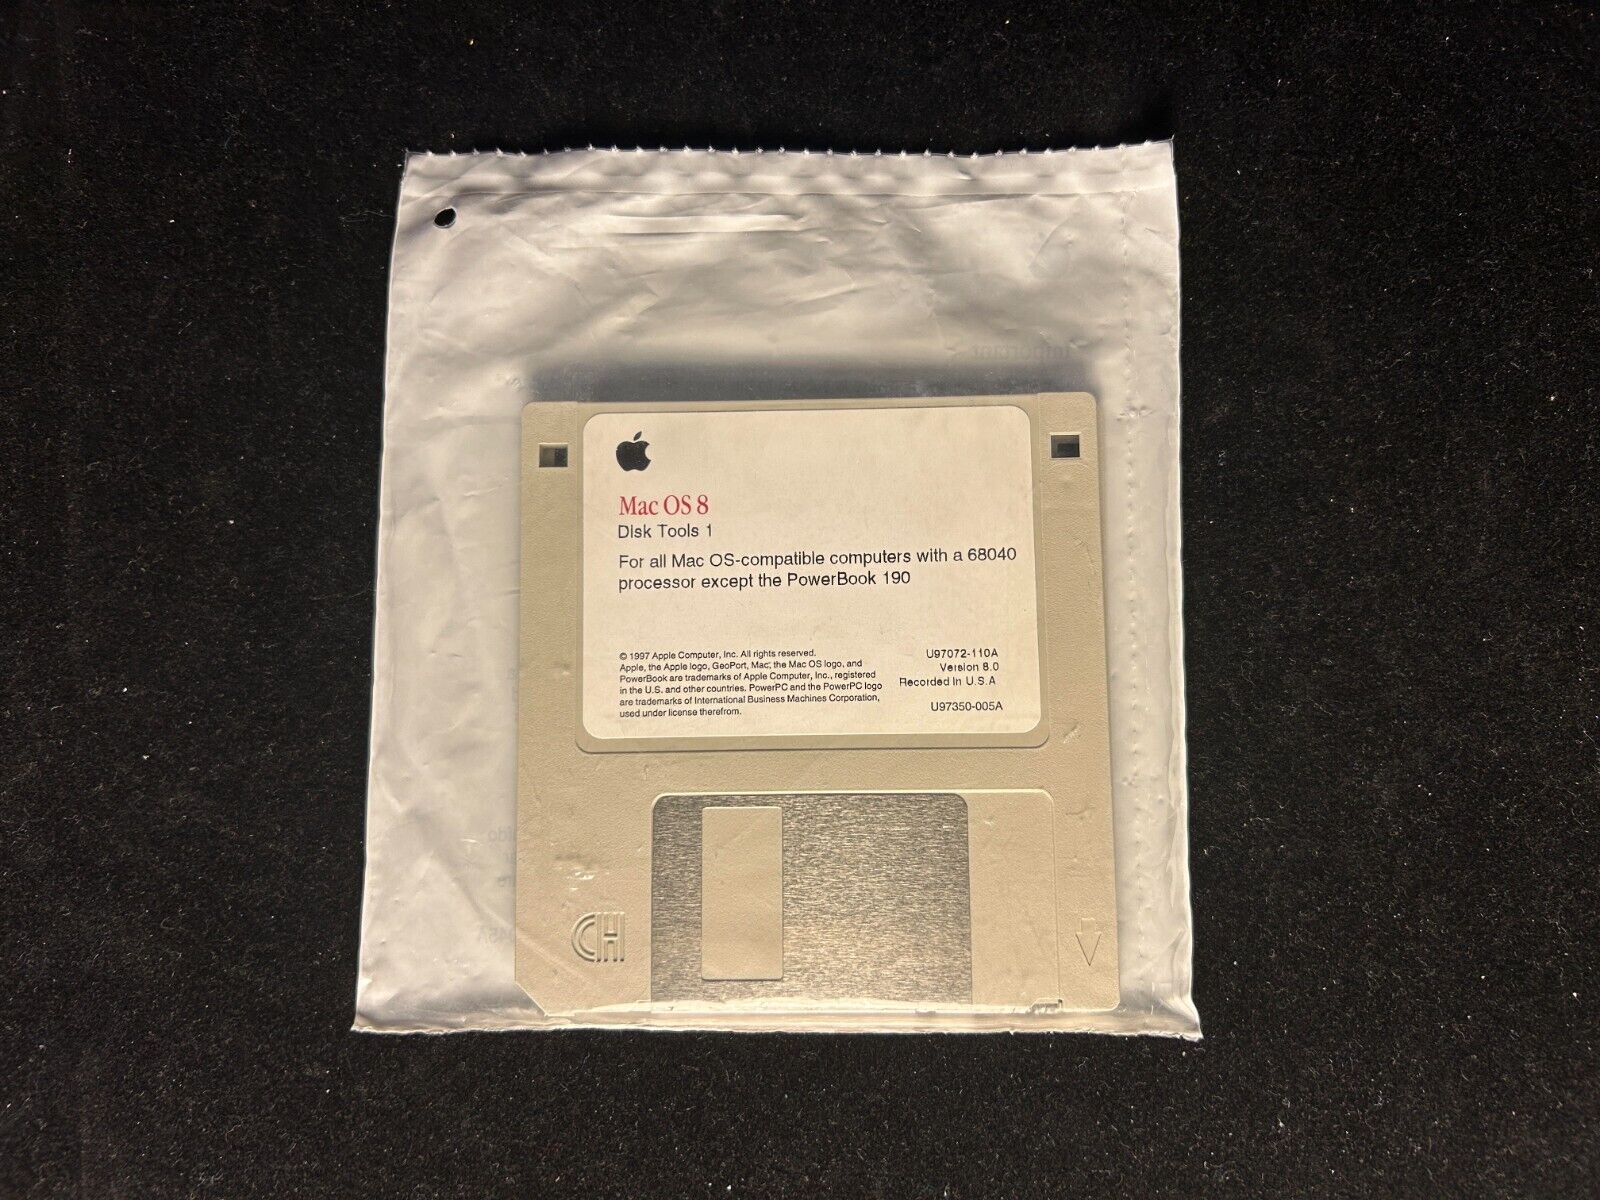 Mac OS 8 Apple Macintosh Disk Tools Floppy Disks 1 & 2; New Sealed